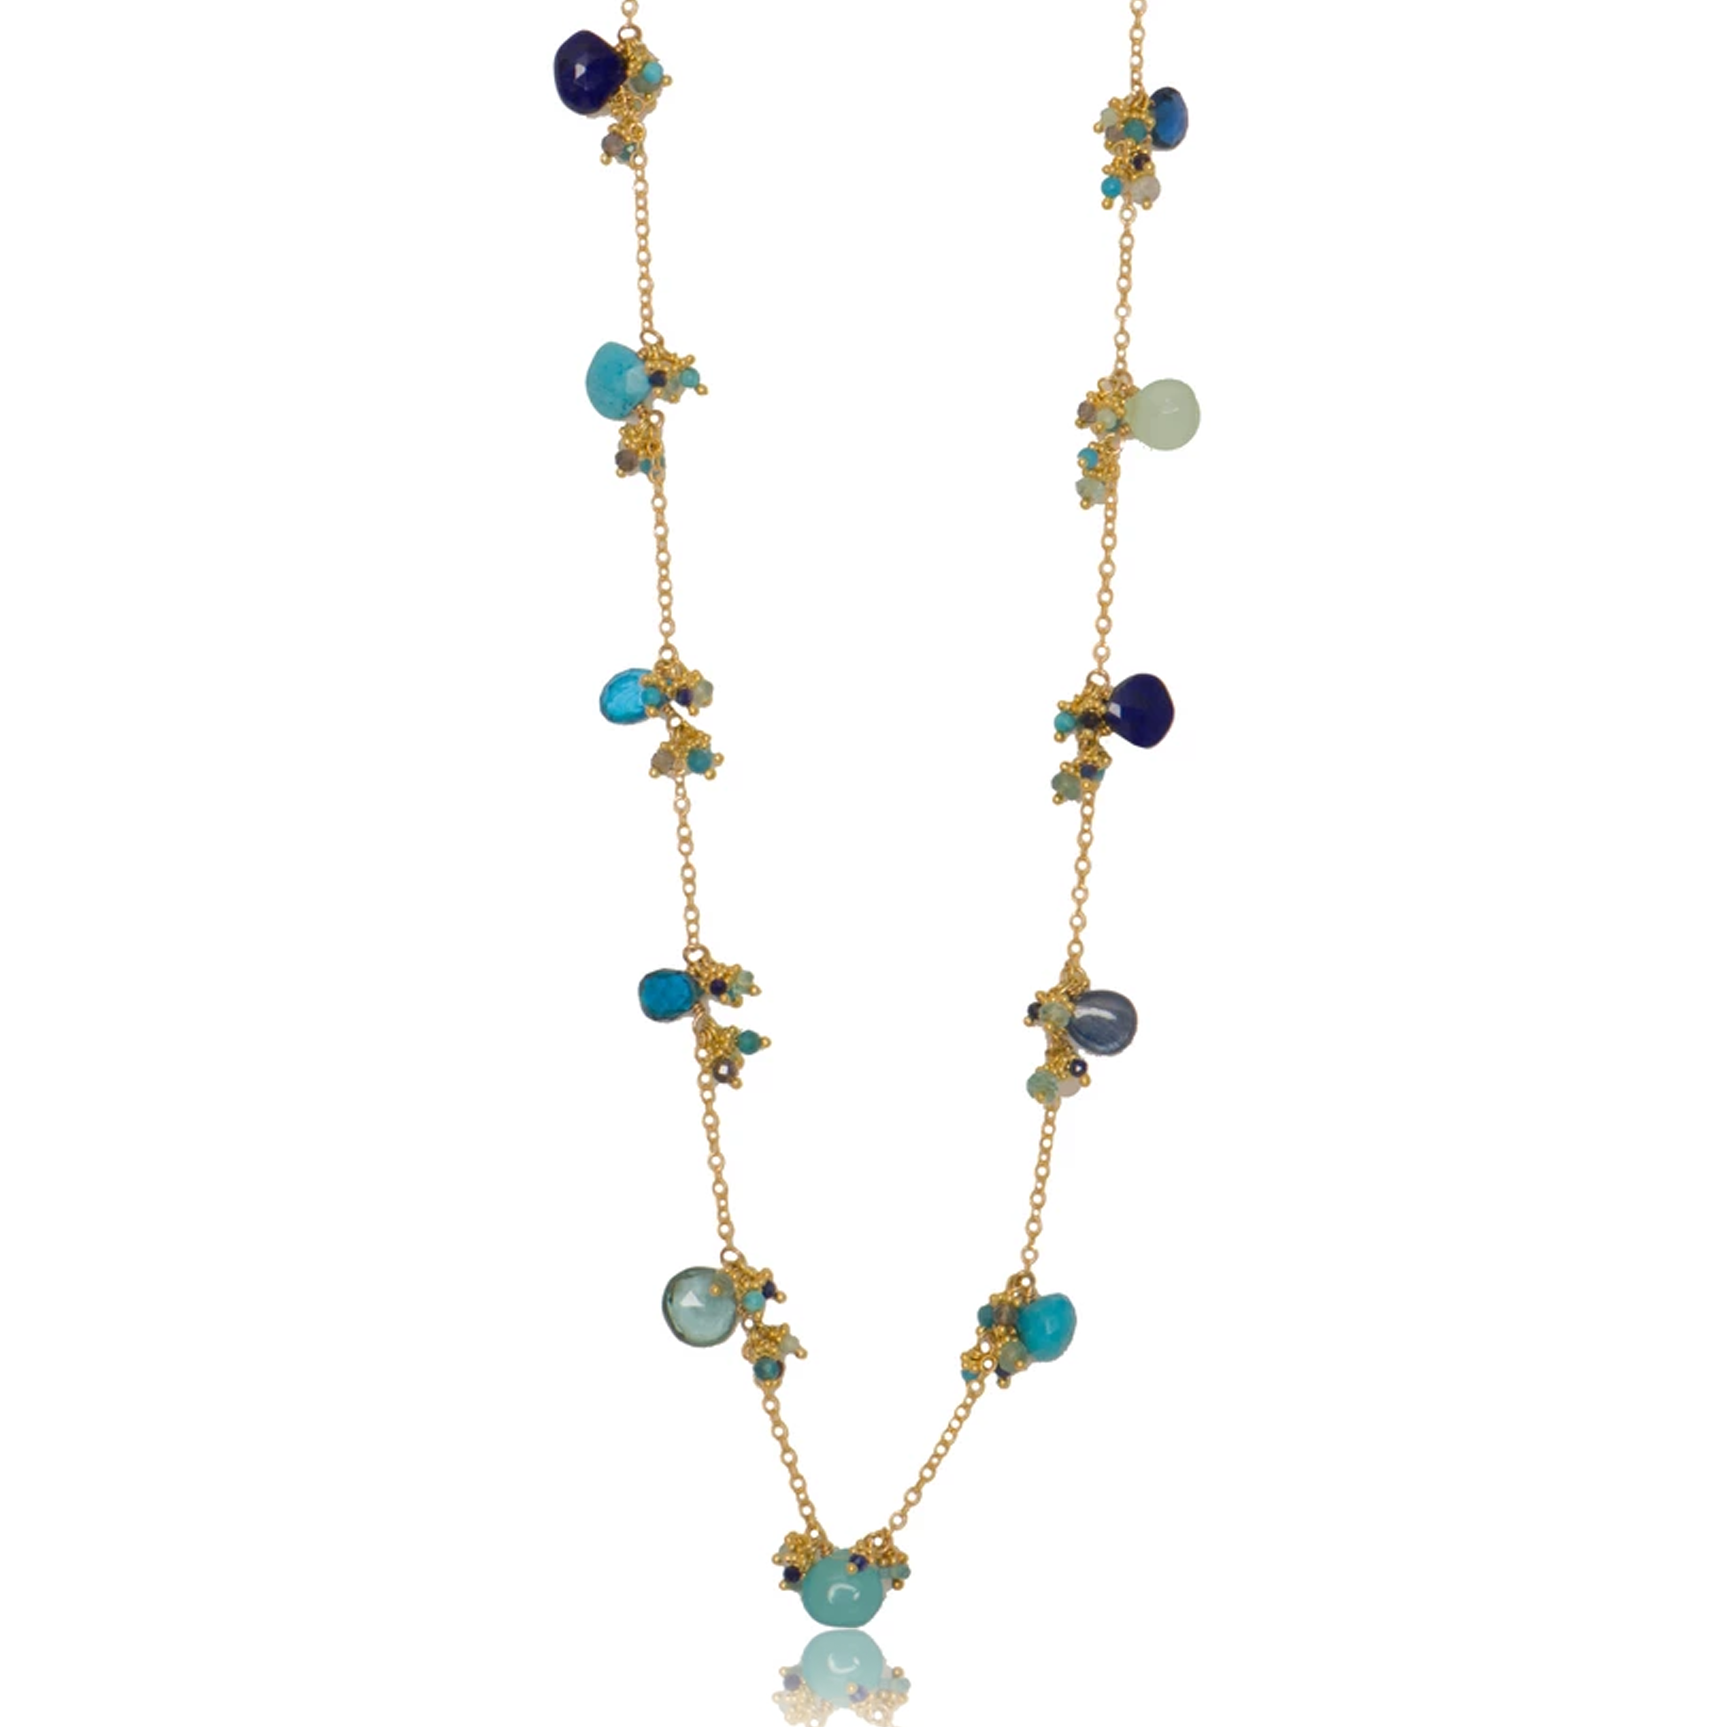 Short Linked Classic Jellybean Necklace - Blues